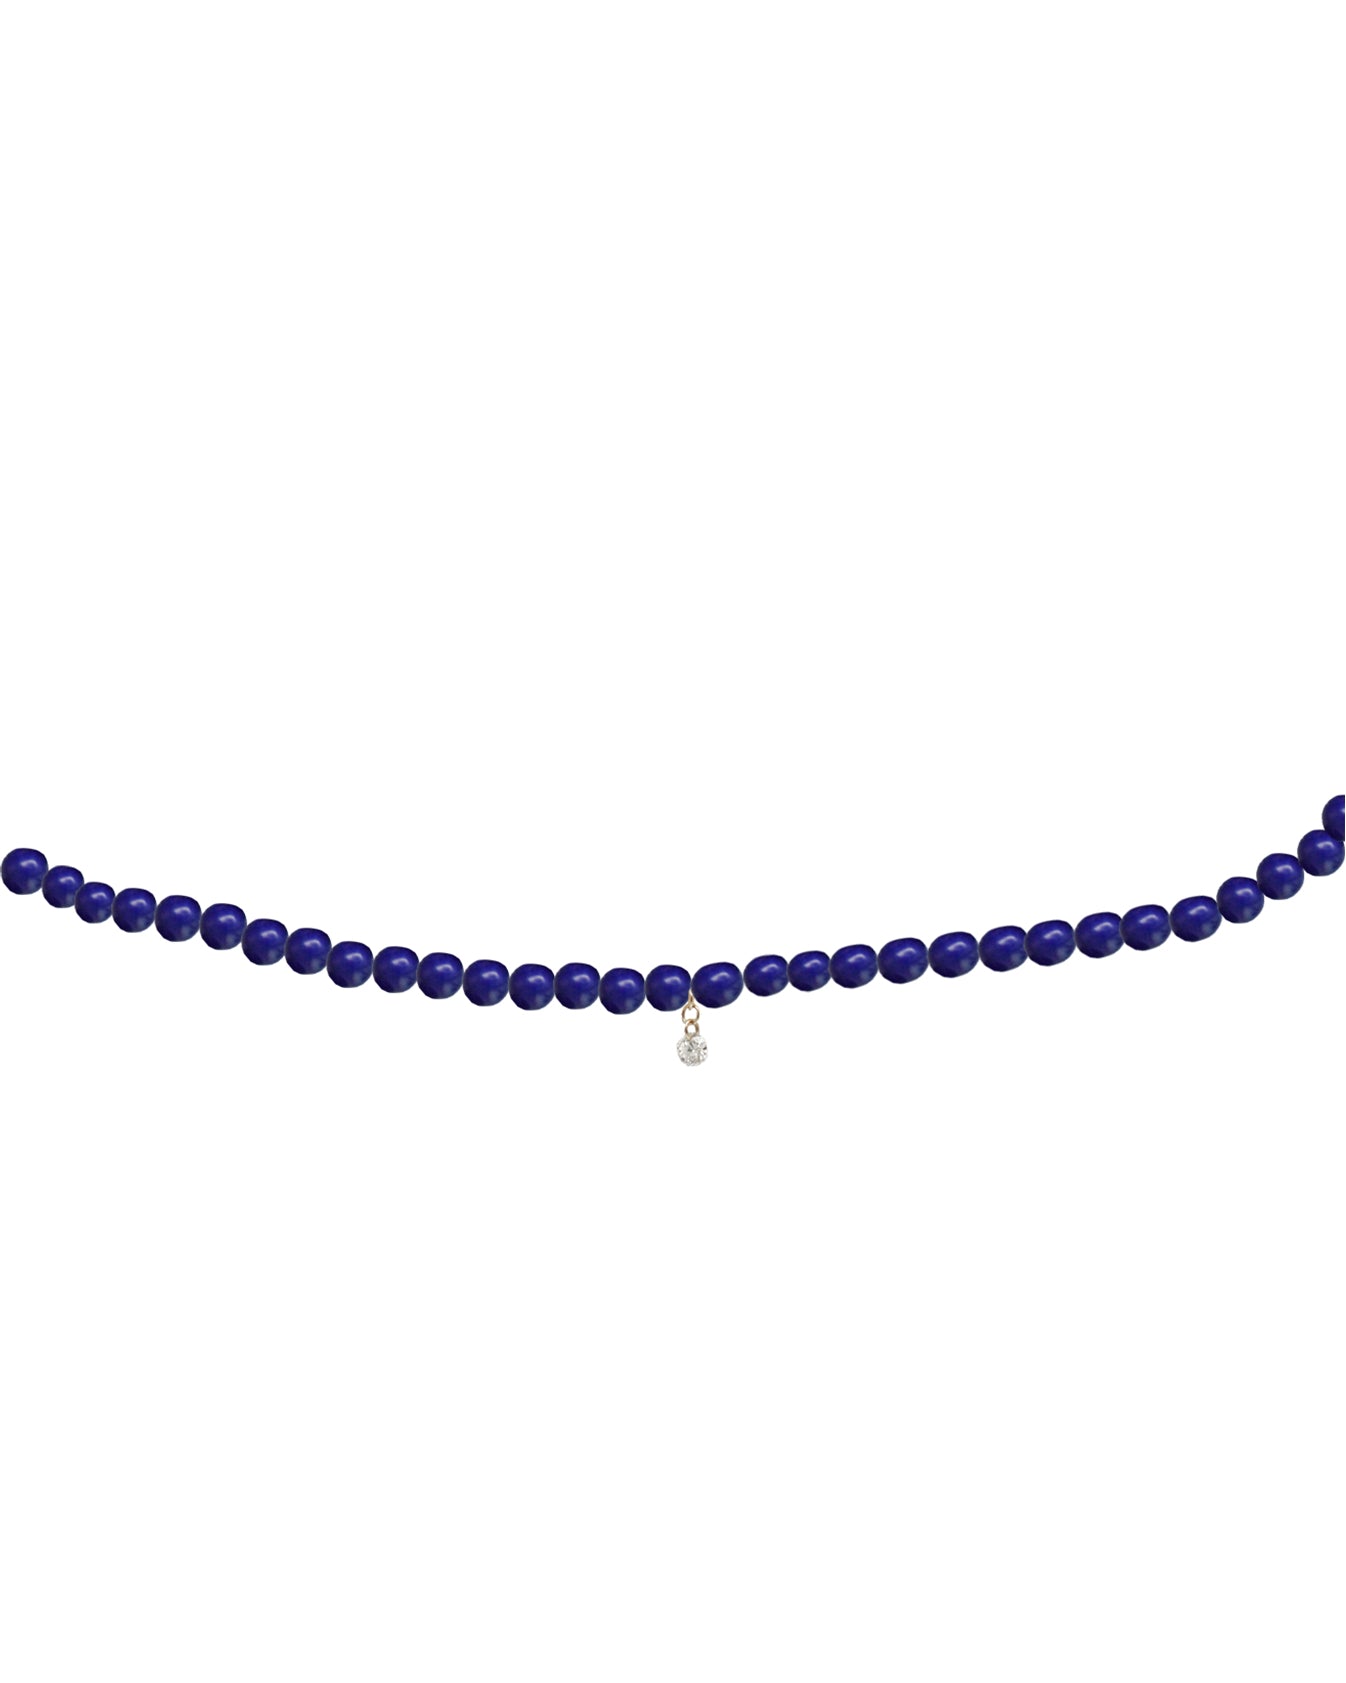 Bracelet Semi Precious 69 lapis lazuli or Jaune